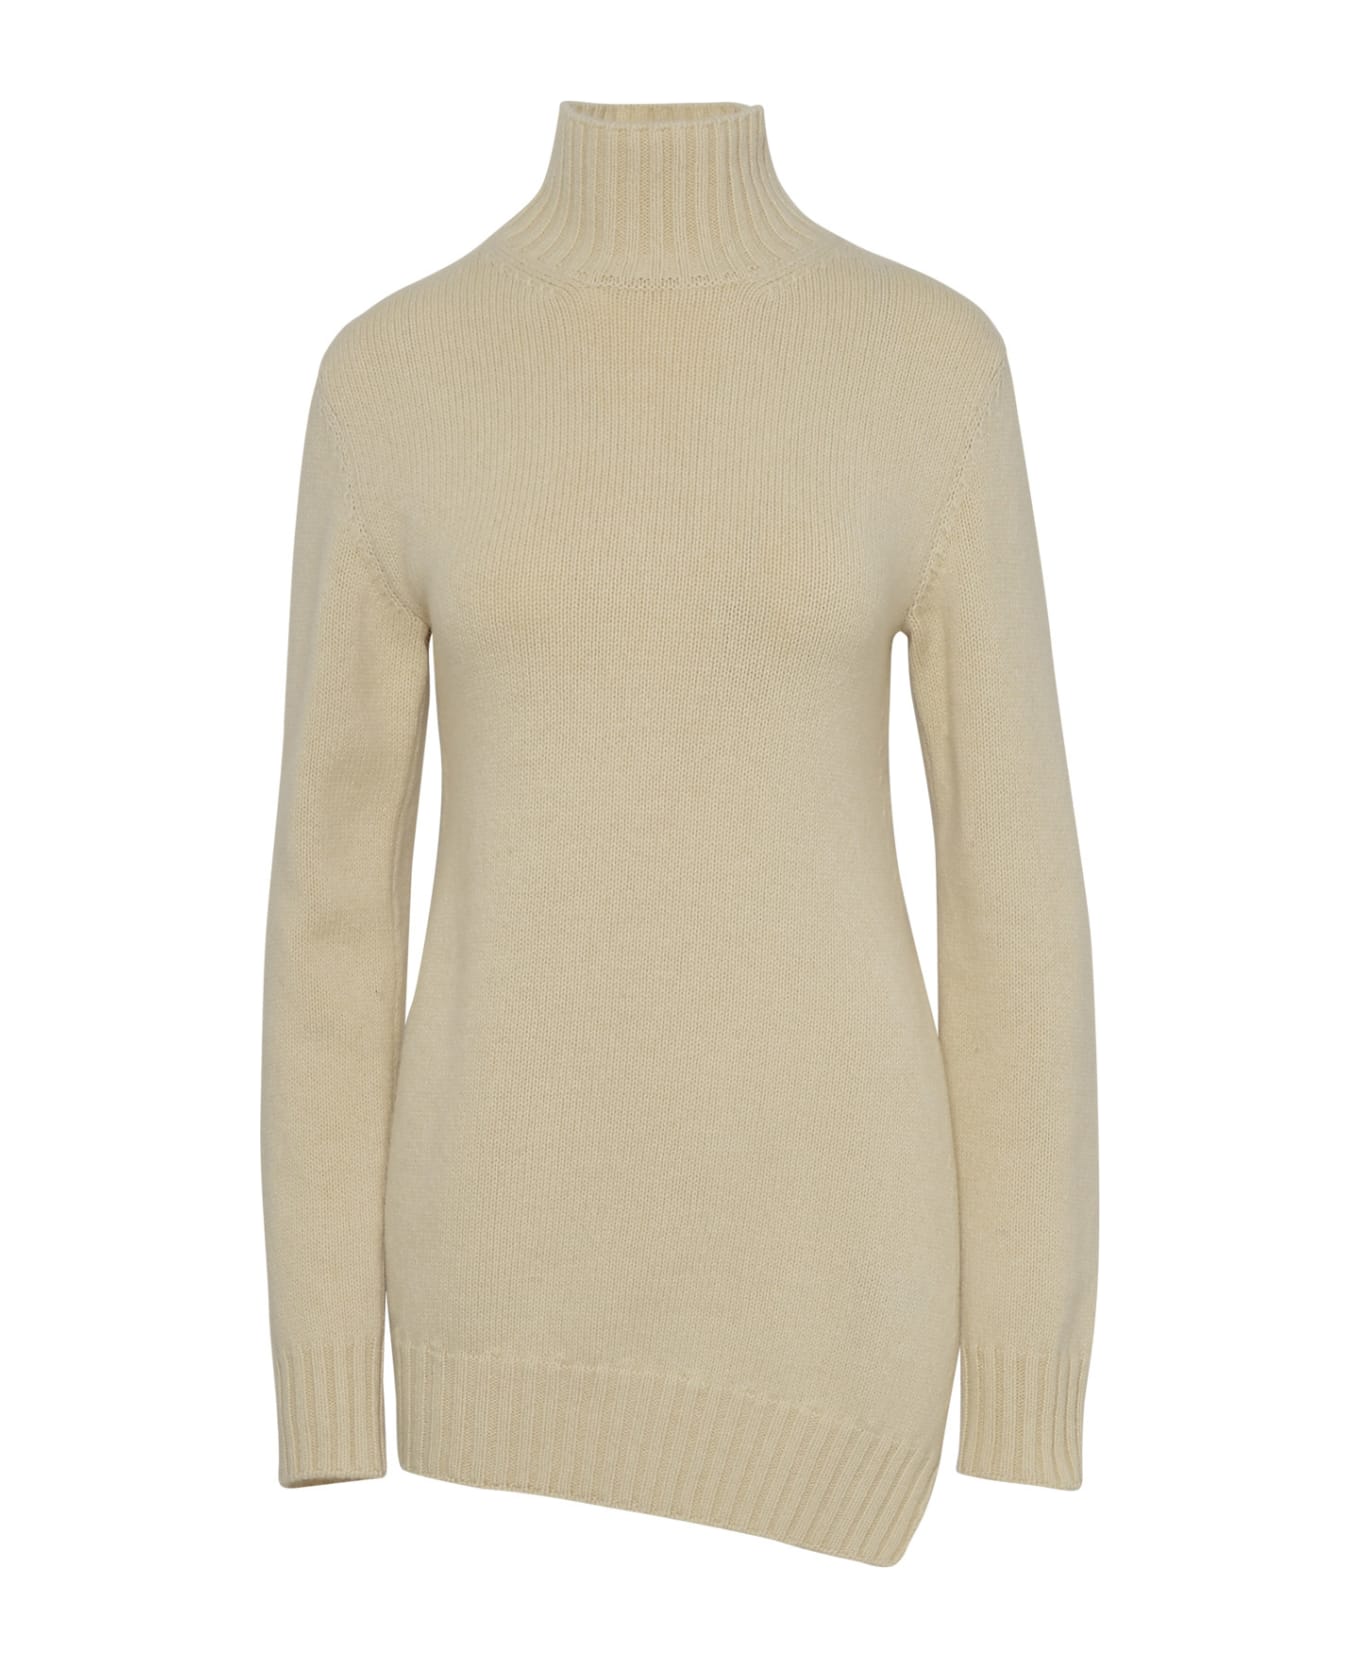 Jil Sander Ivory Yack Blend Turtleneck Sweater - Cream